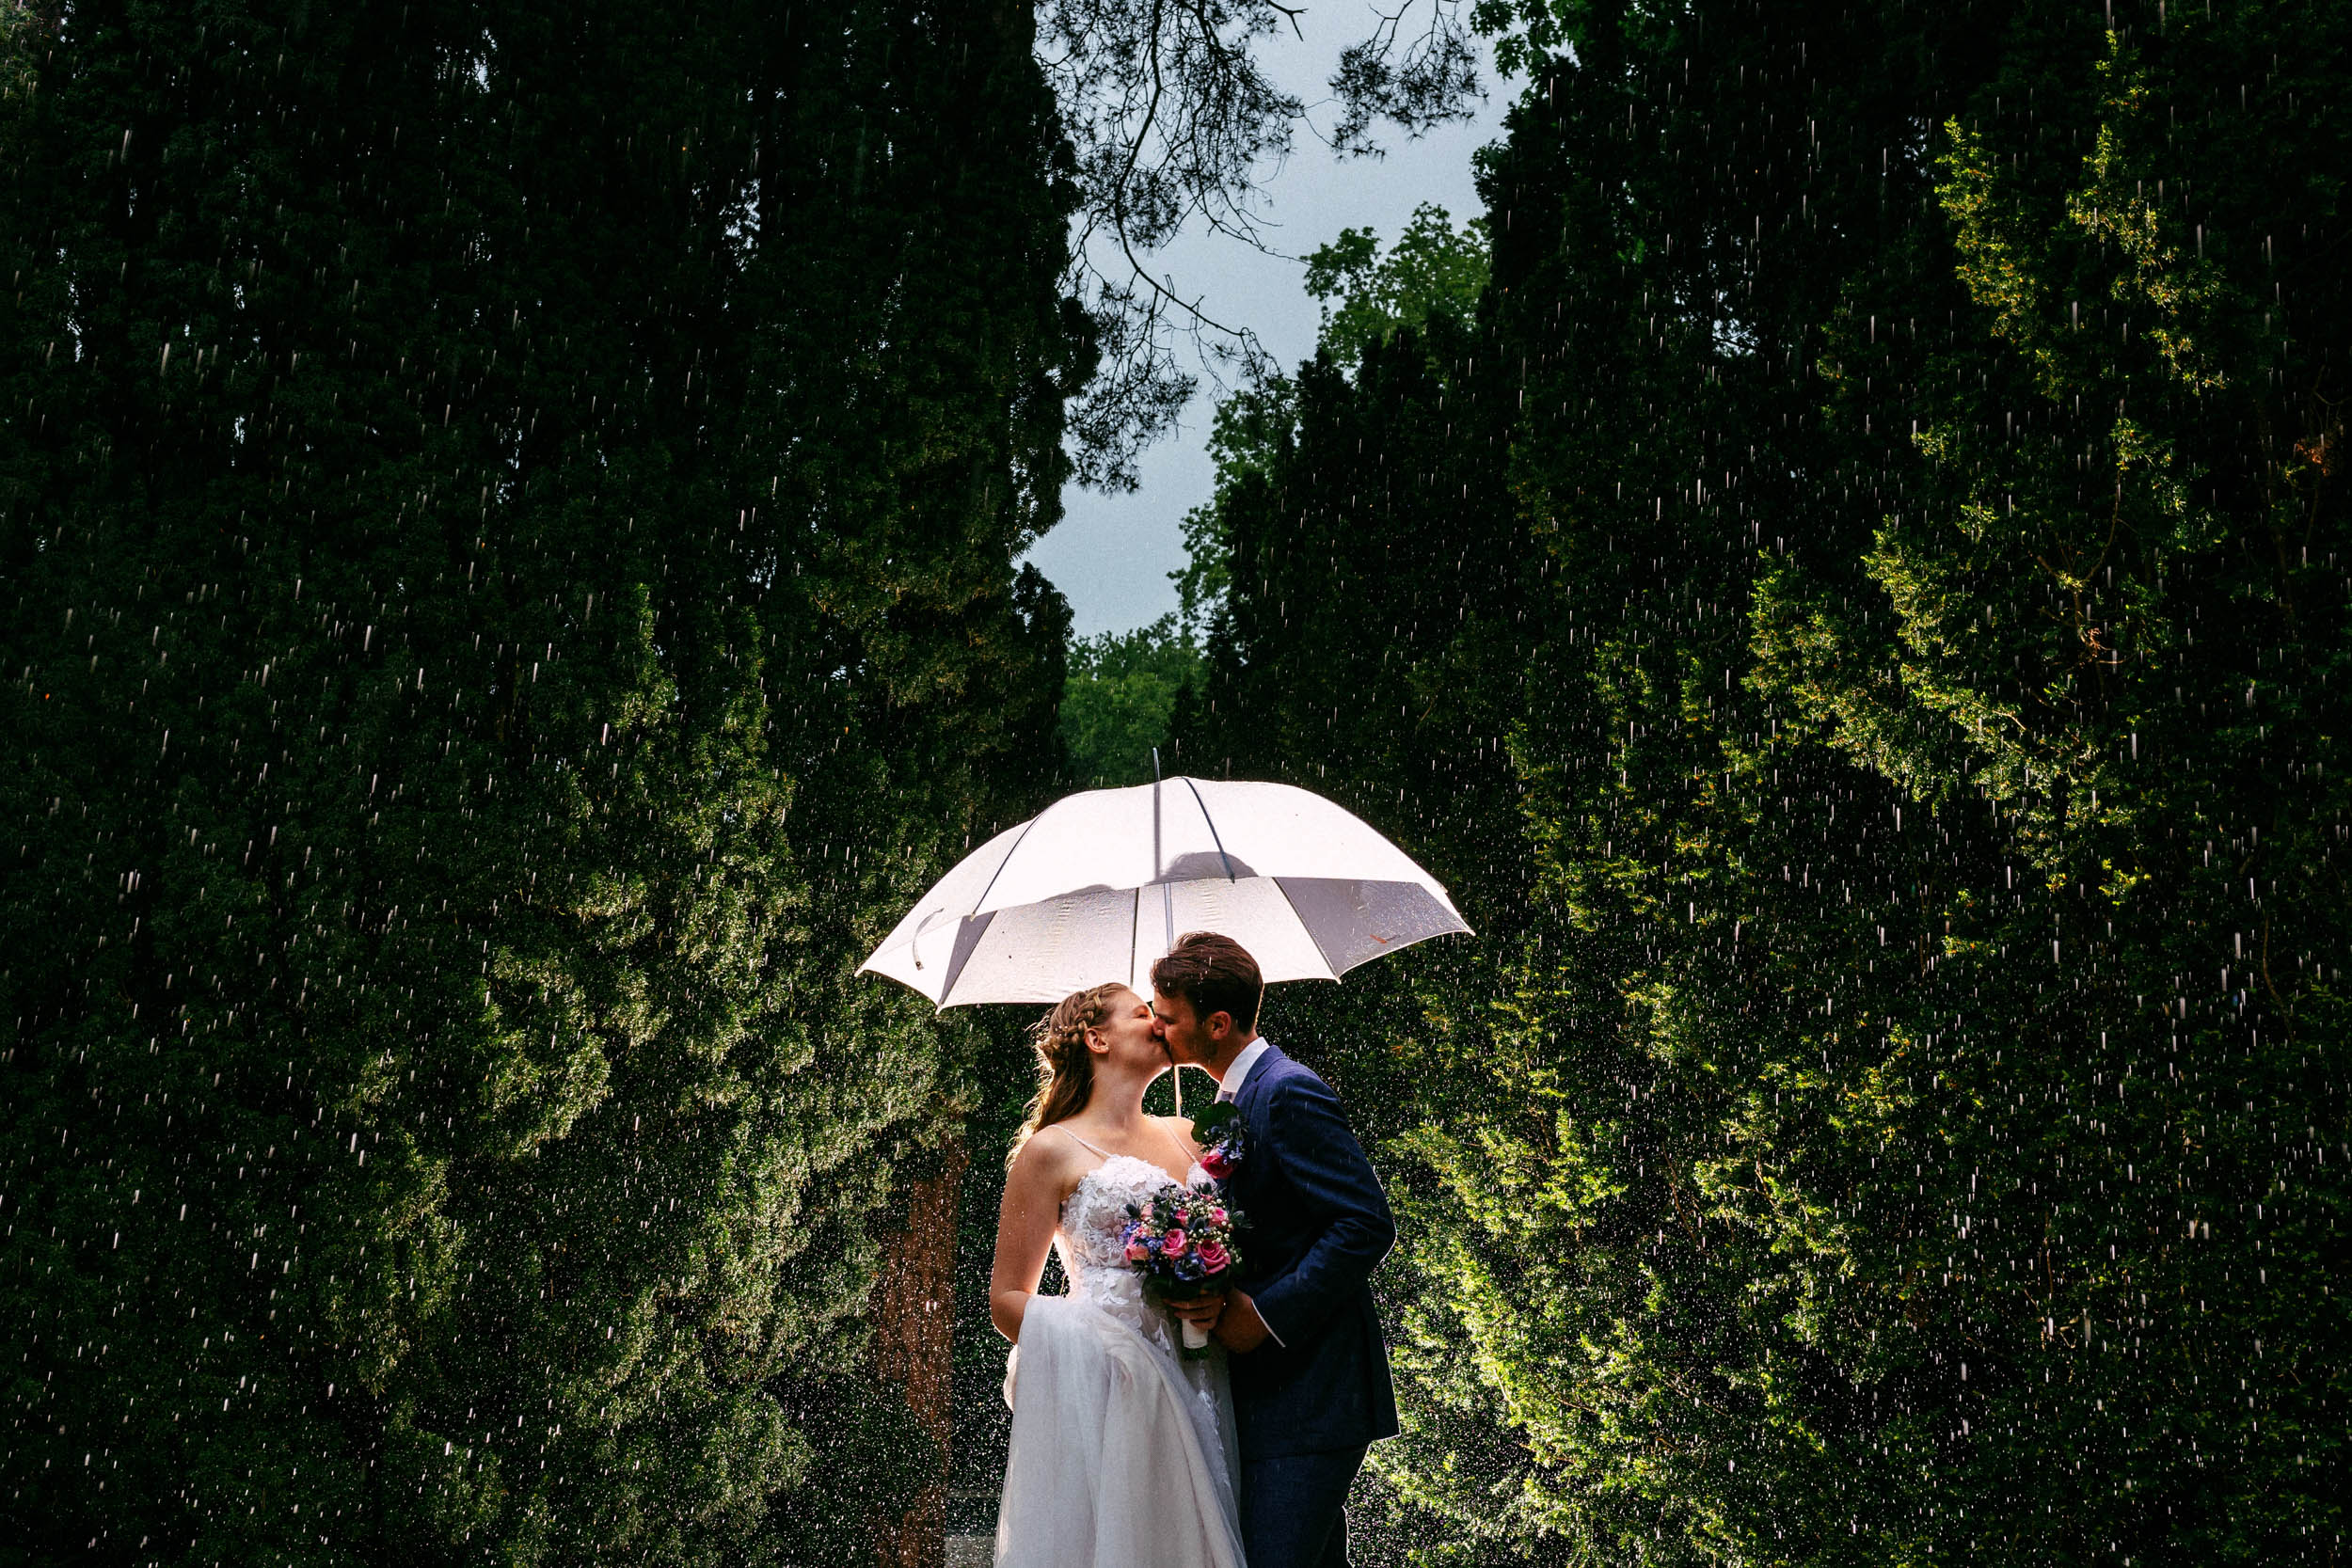 A bride and groom kiss under an umbrella in the rain.